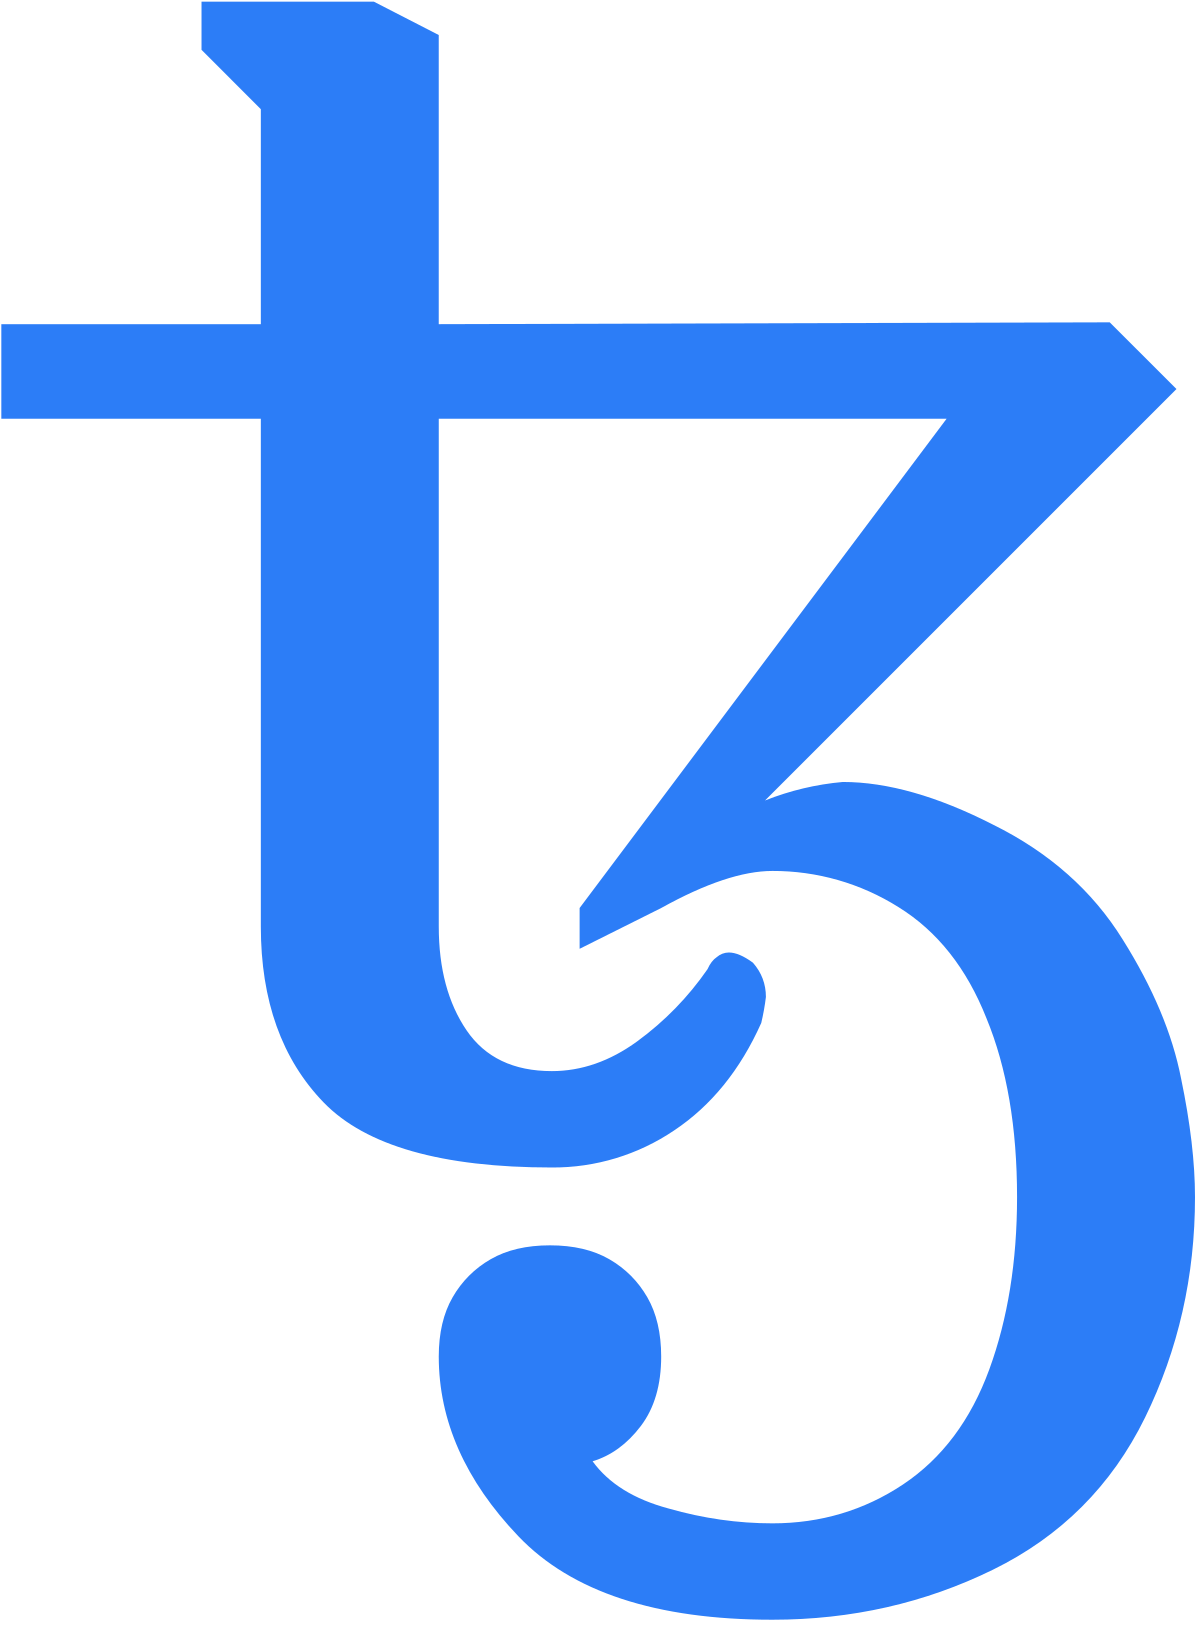 File:Tezos logo.svg - Wikimedia Commons